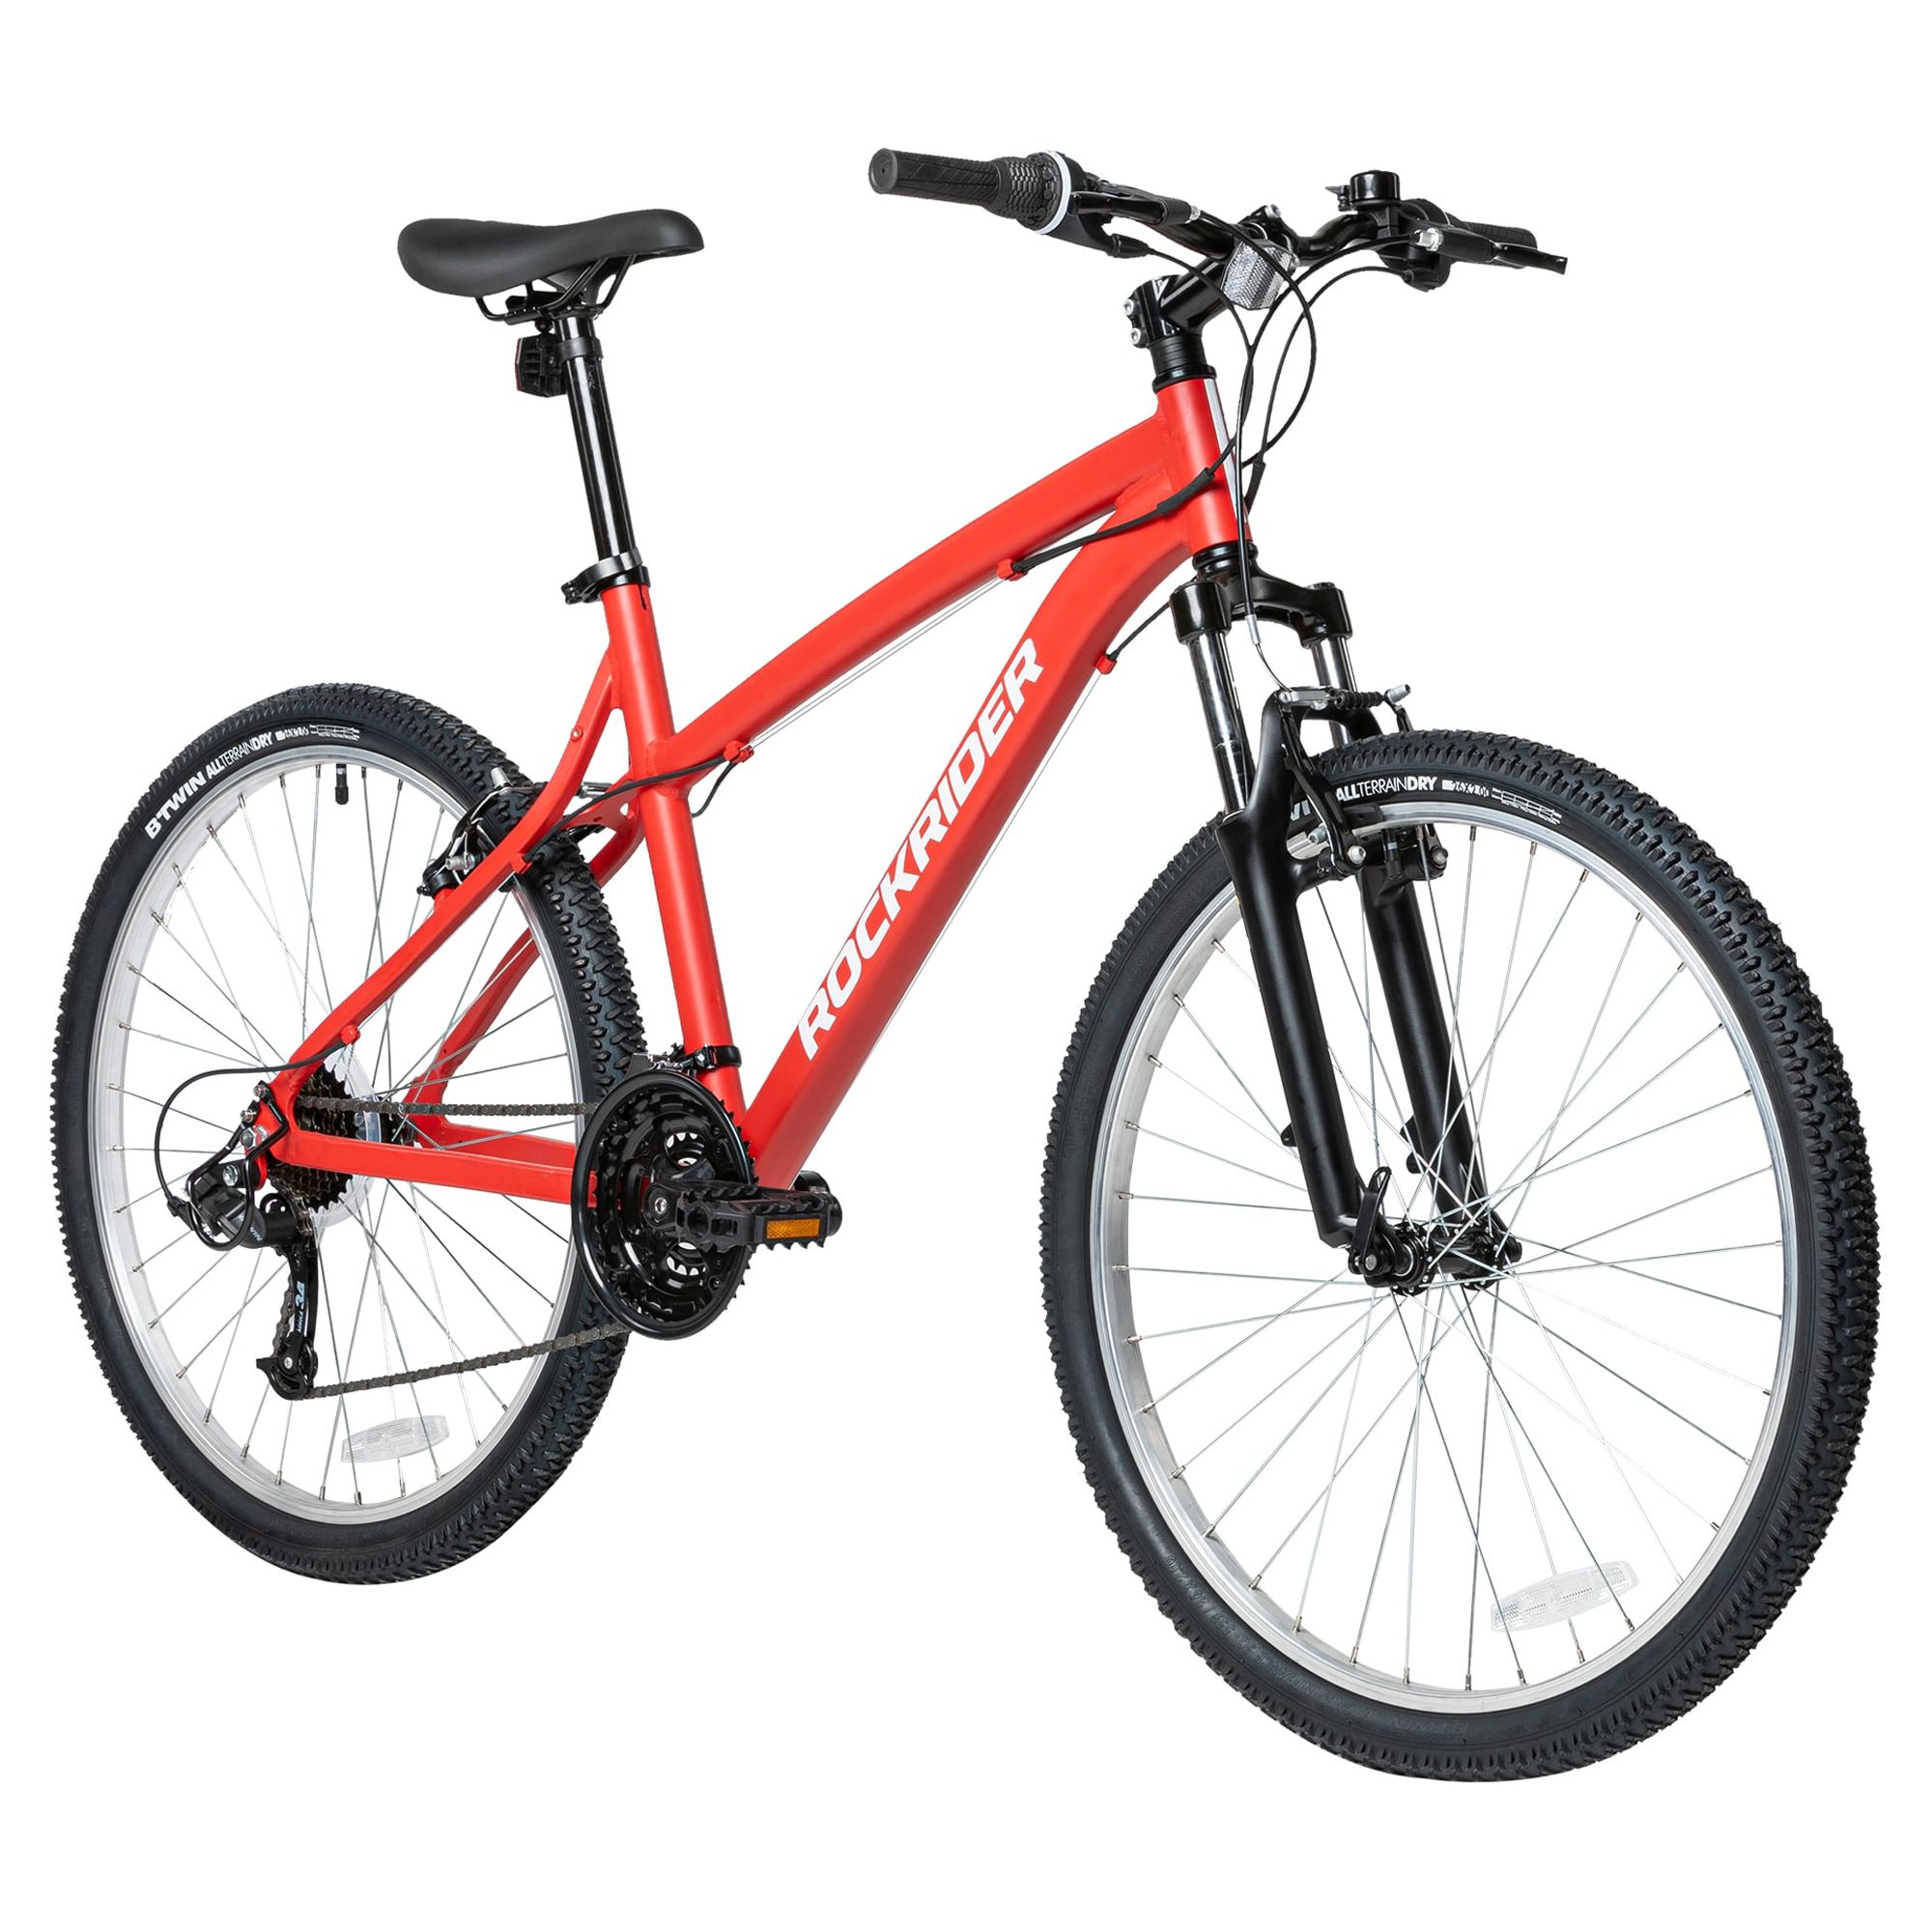 Decathlon Rockrider ST50, 21 Speed Aluminum Mountain Bike, 26", Unisex, Red, Small - image 1 of 12